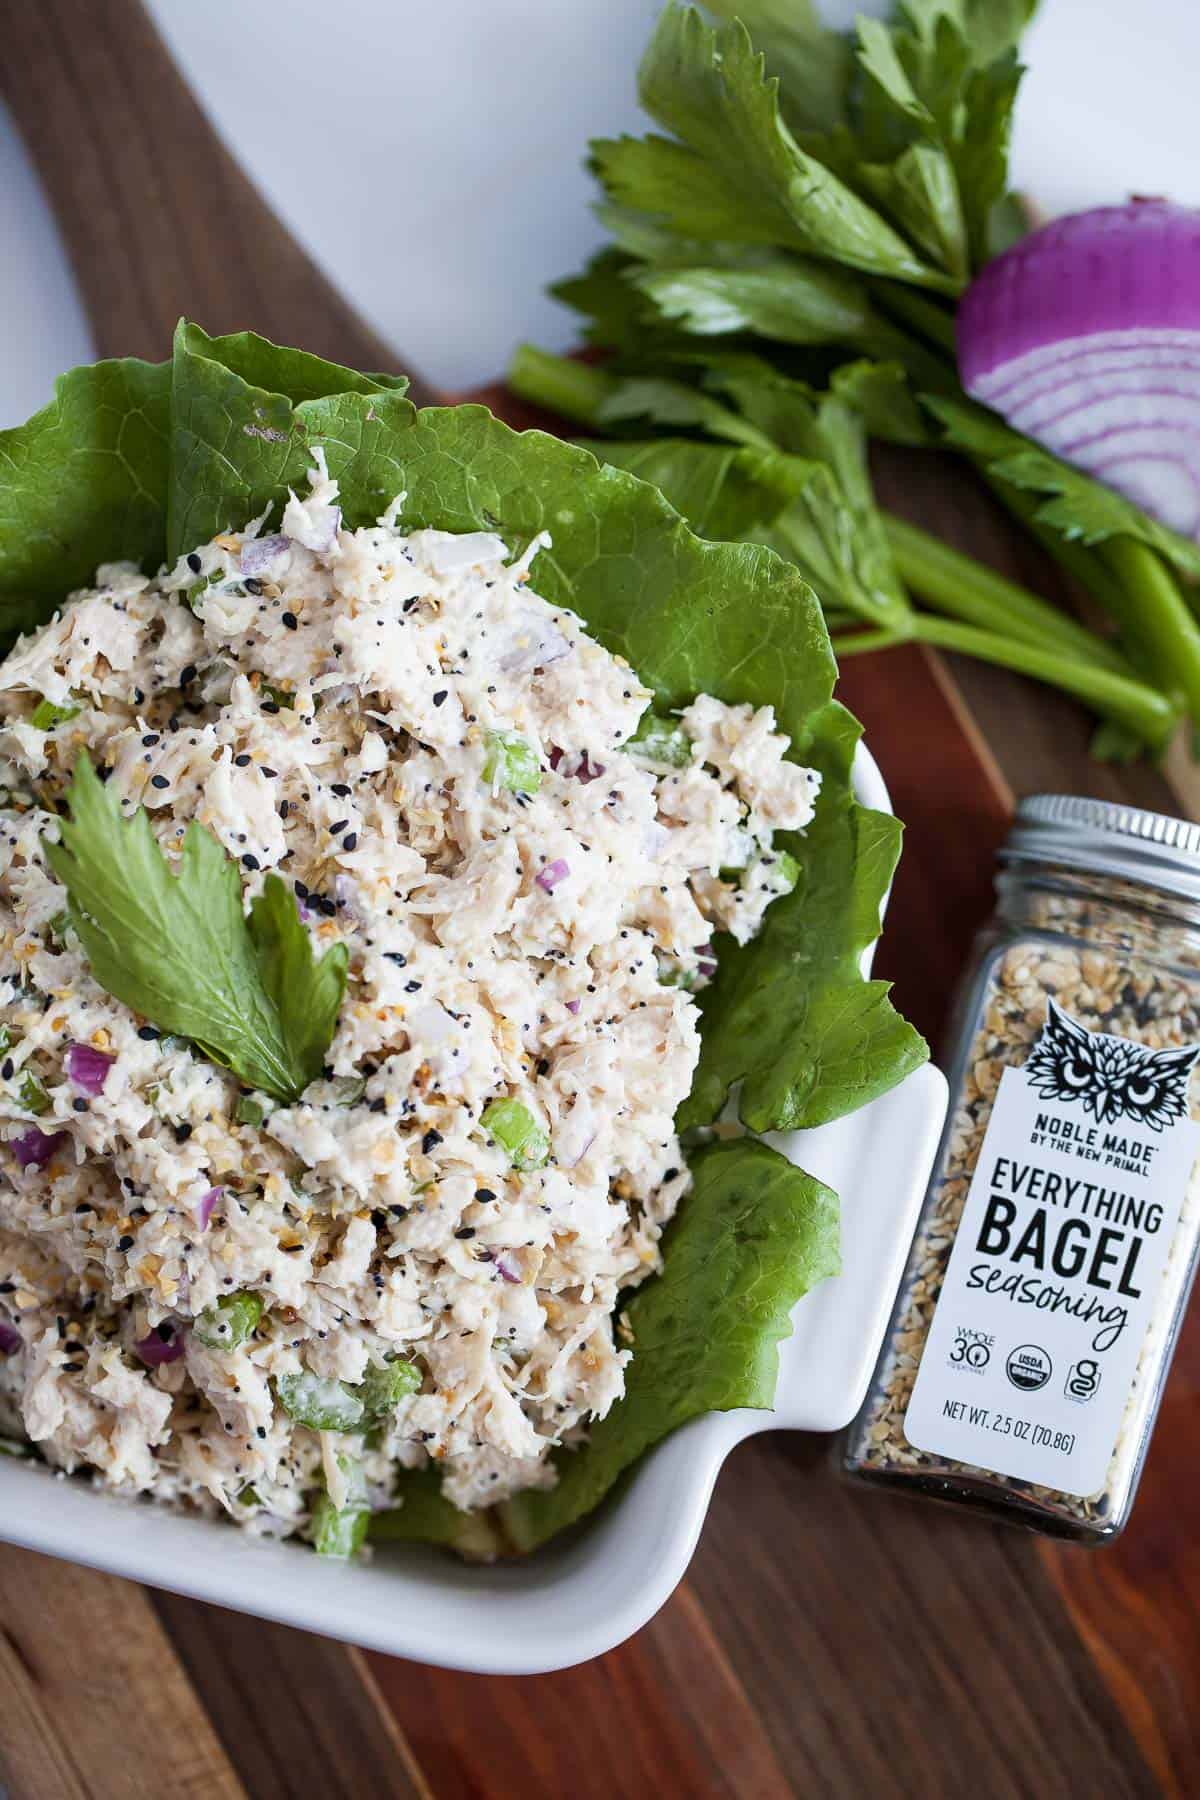 Everything Bagel Tuna Salad